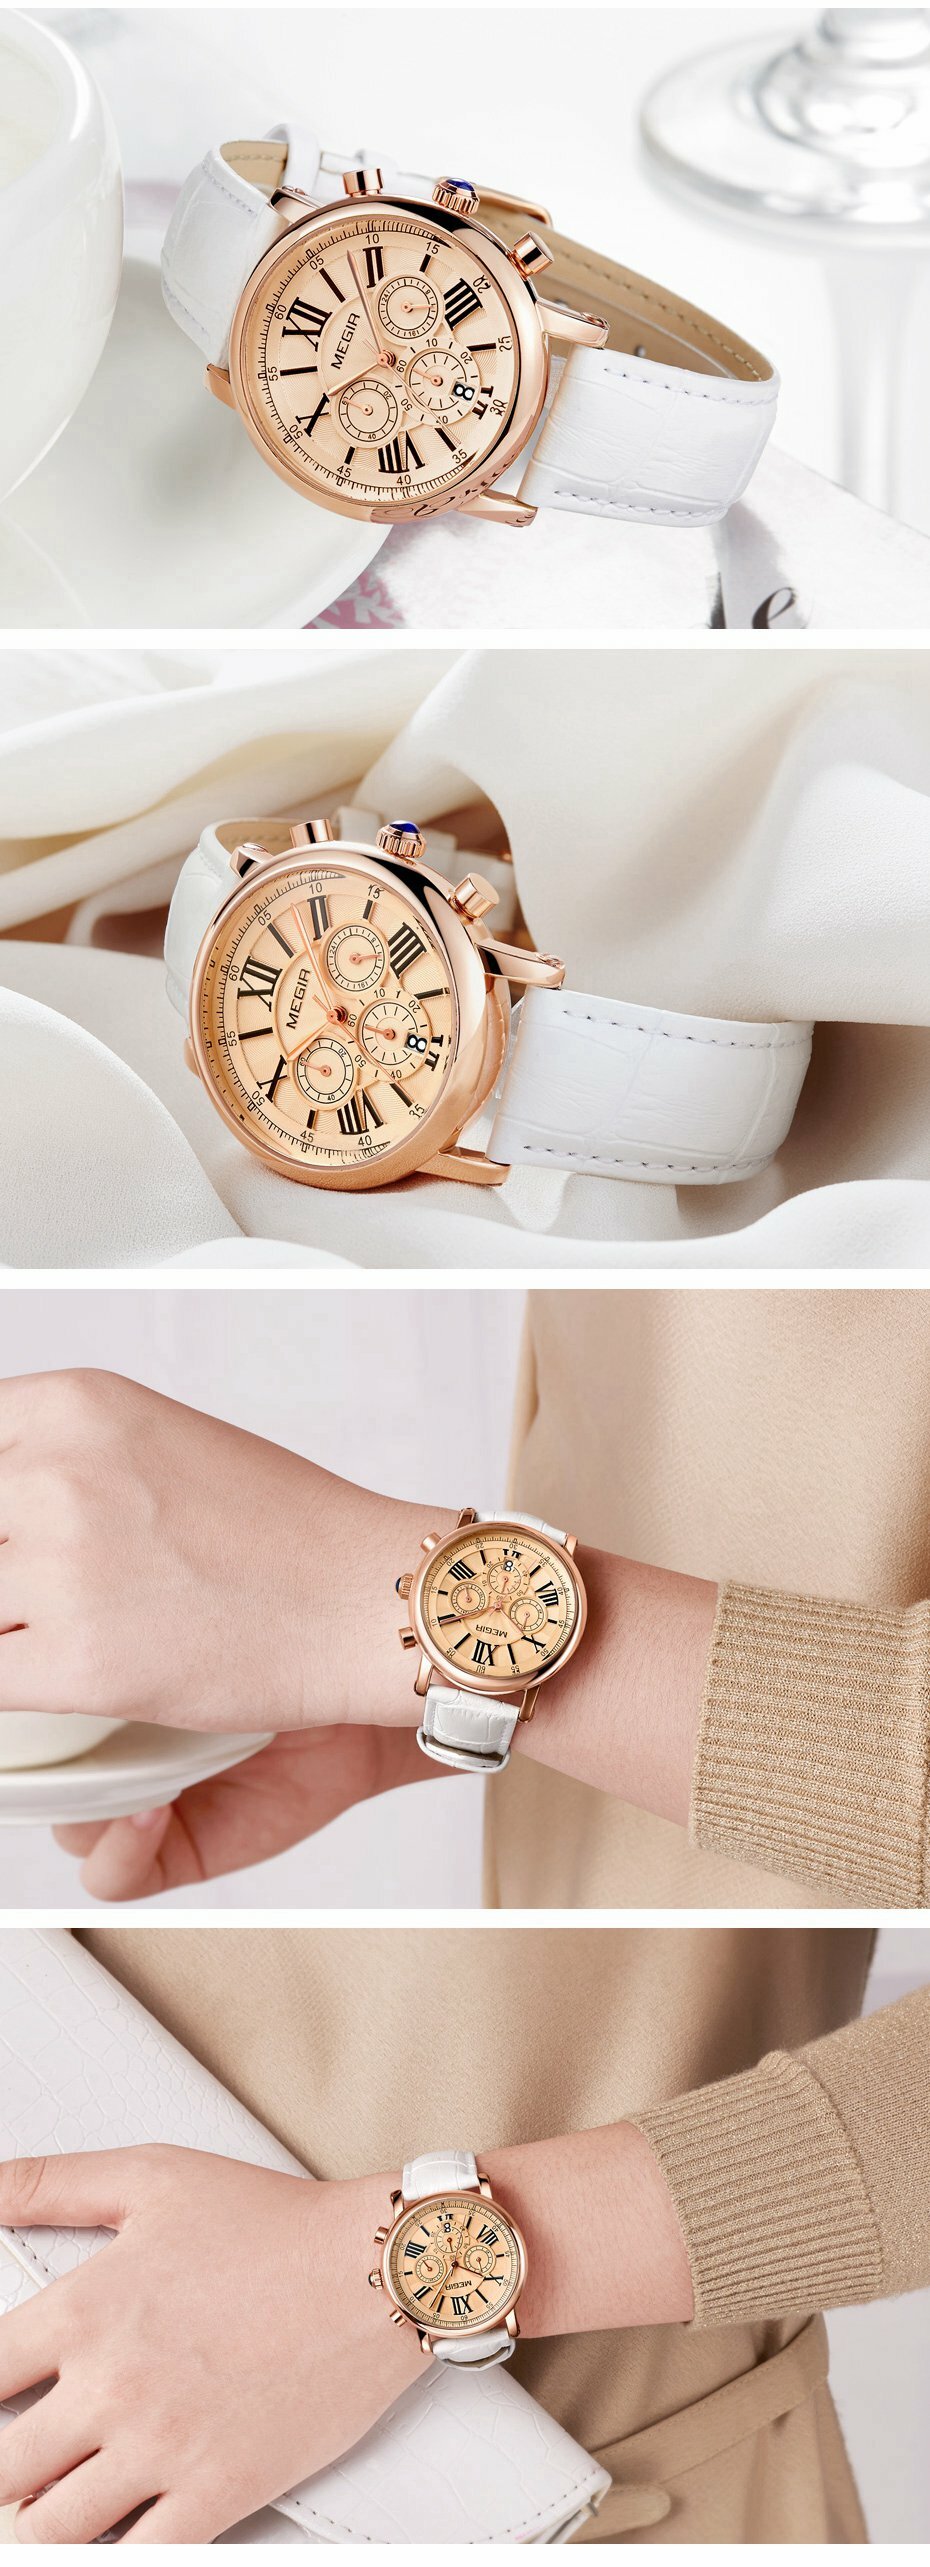 Elegant Ladies Luxury Watch Big Roman Number Date Red White Leather Strap Quartz Watches for Women